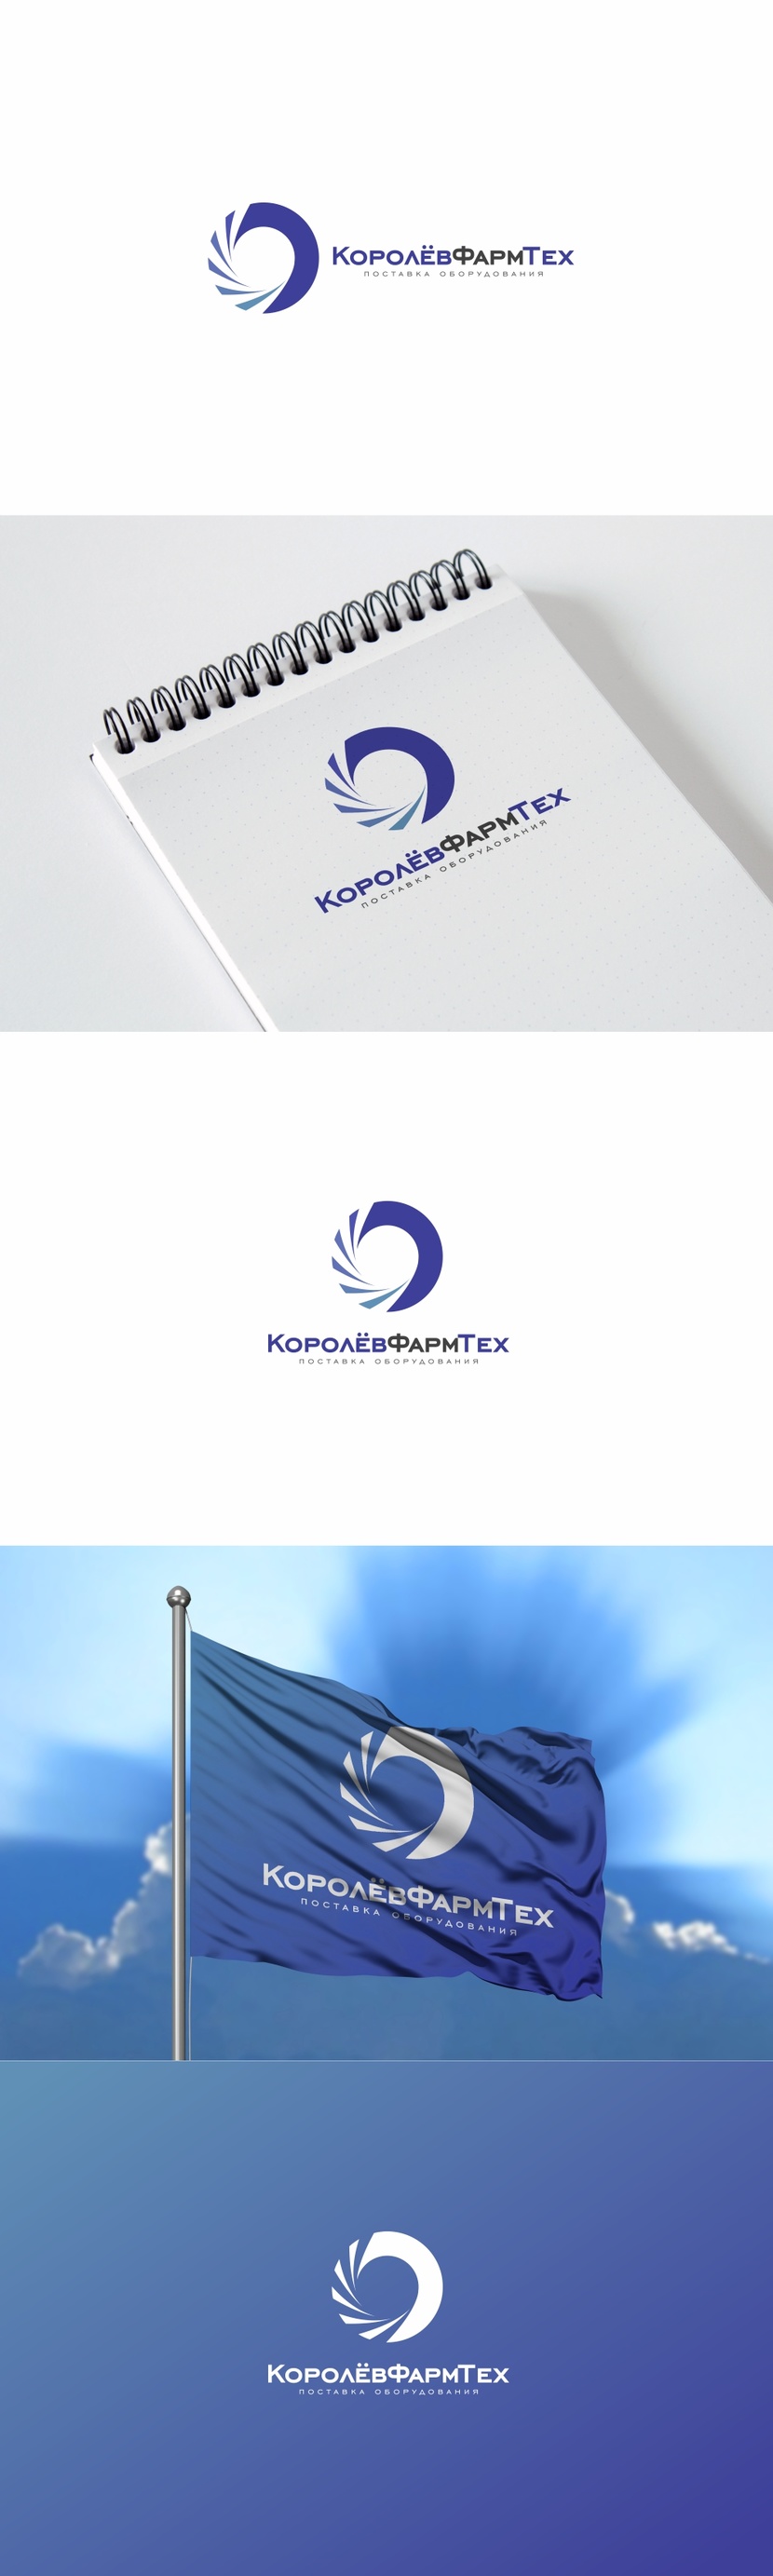 Разработка логотипа для компании КоролёвФармТех  -  автор Андрей Мартынович